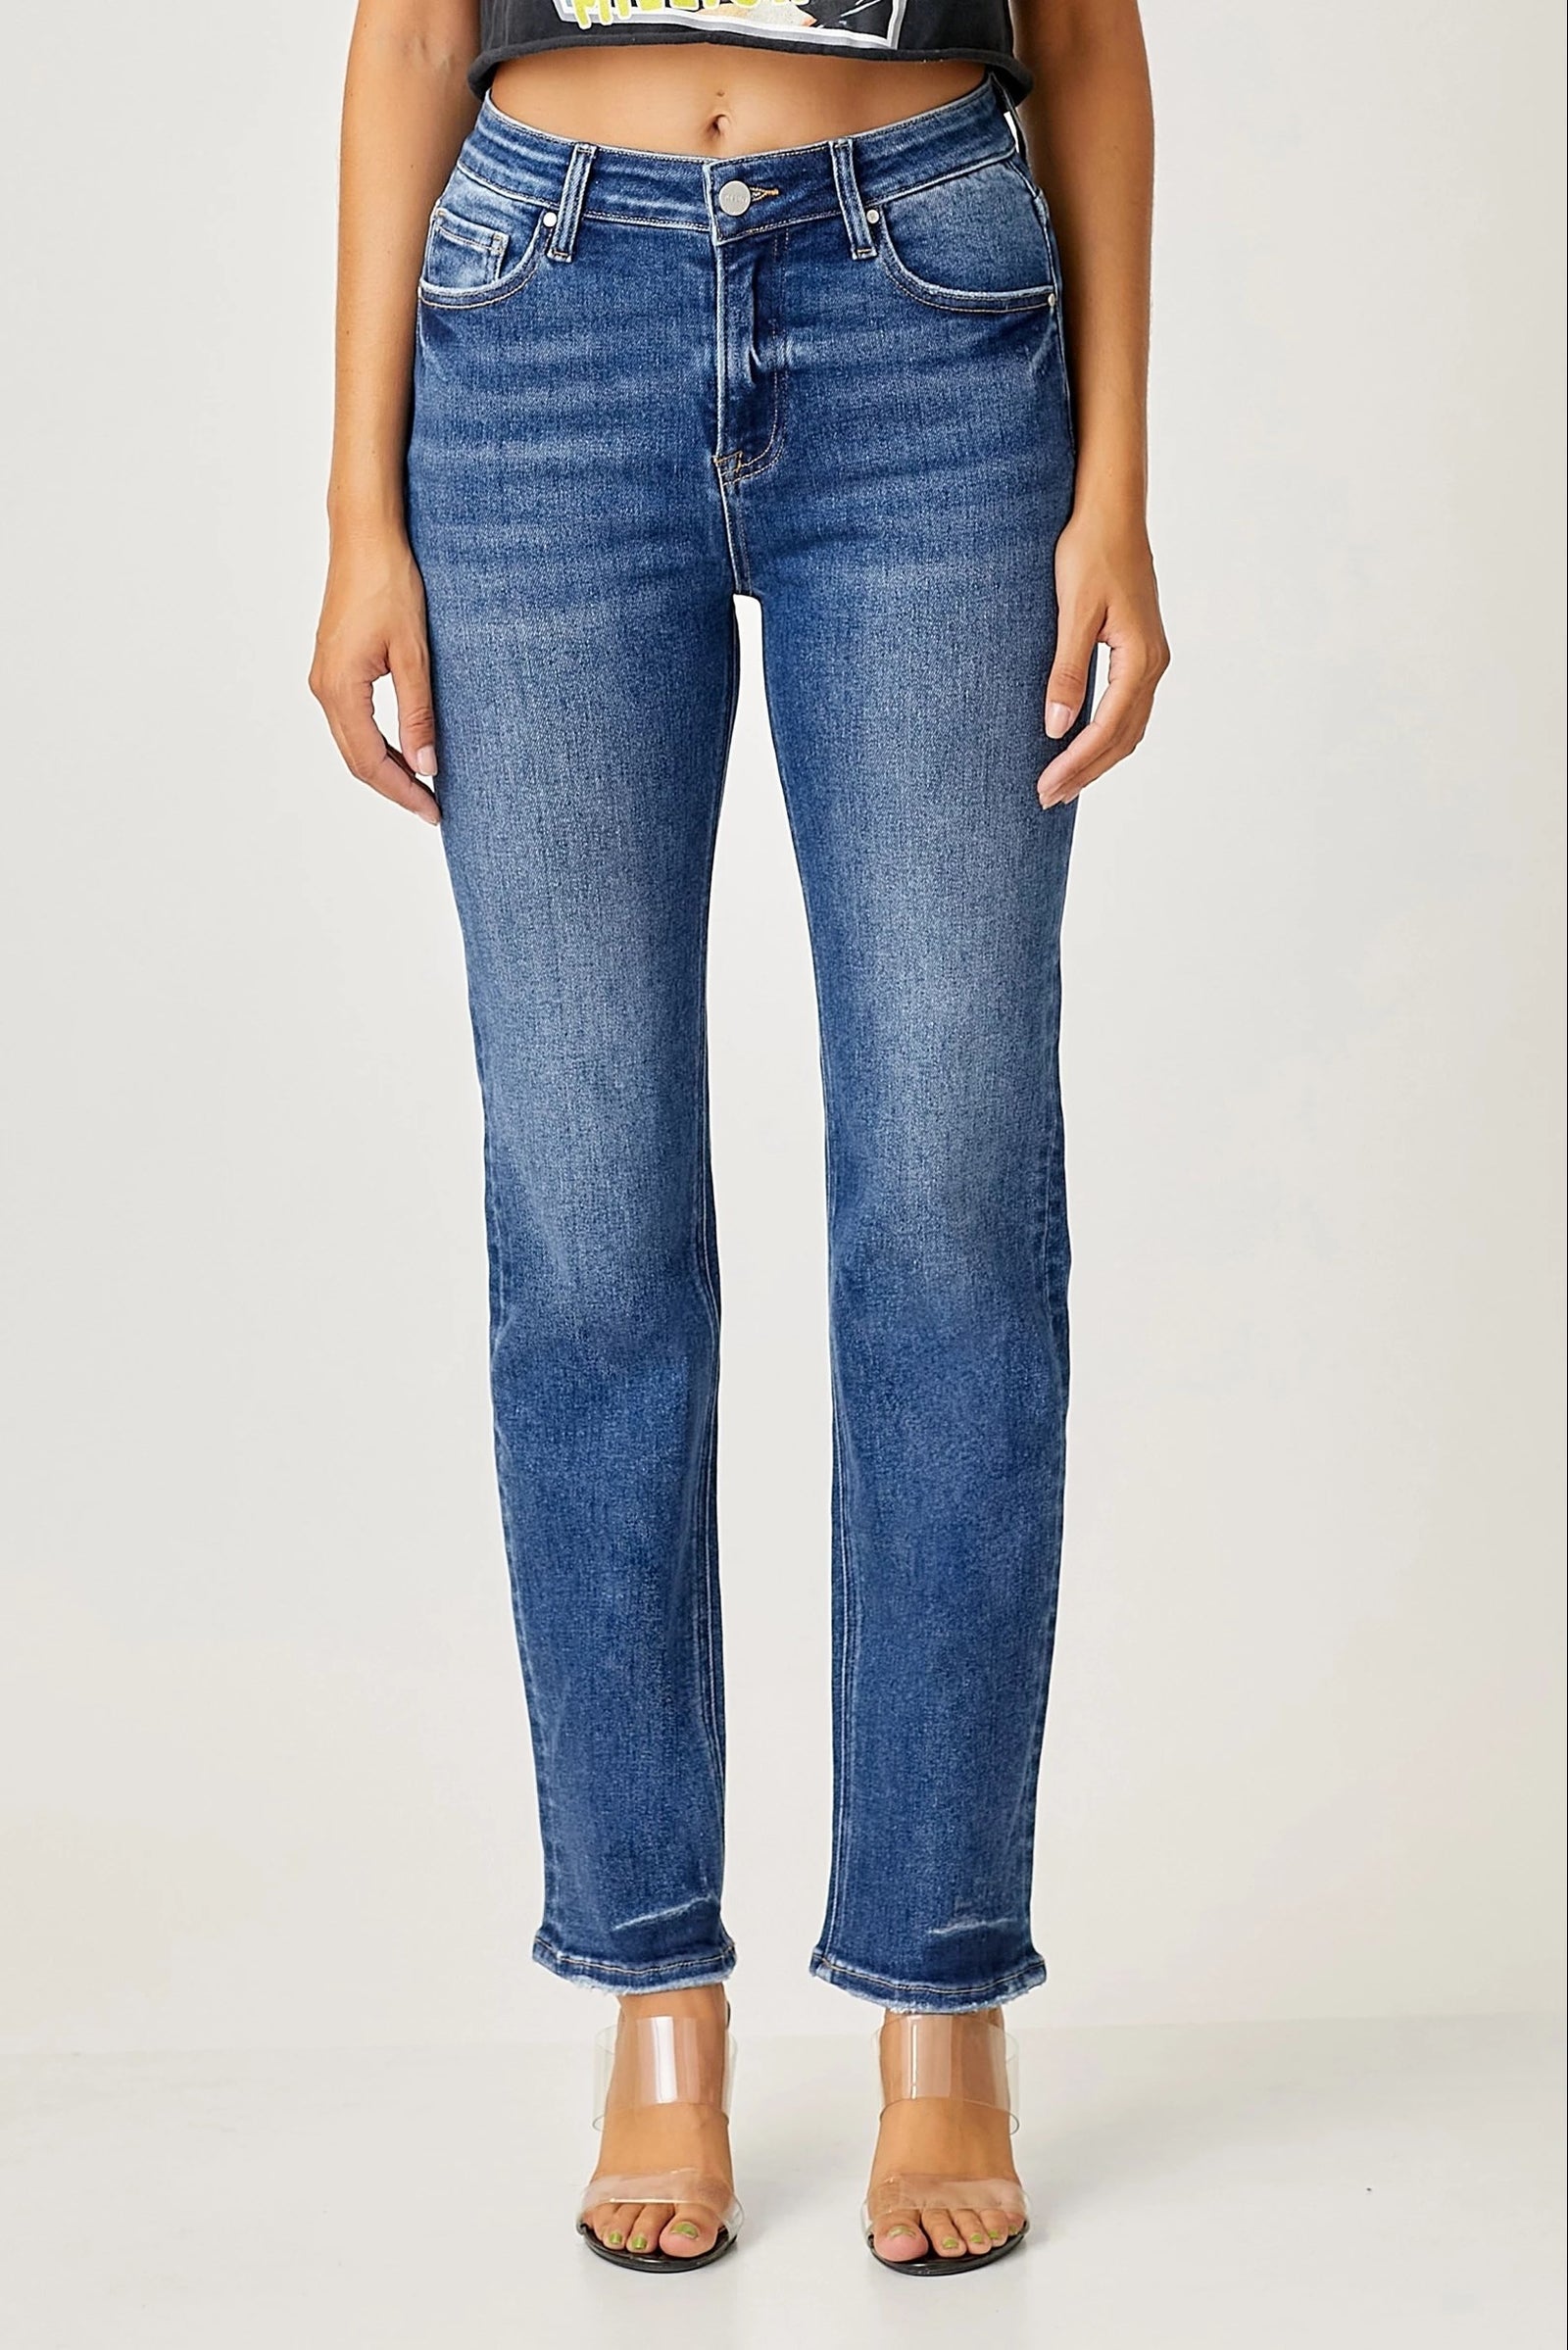 Medium Blue Straight Slim Jeans